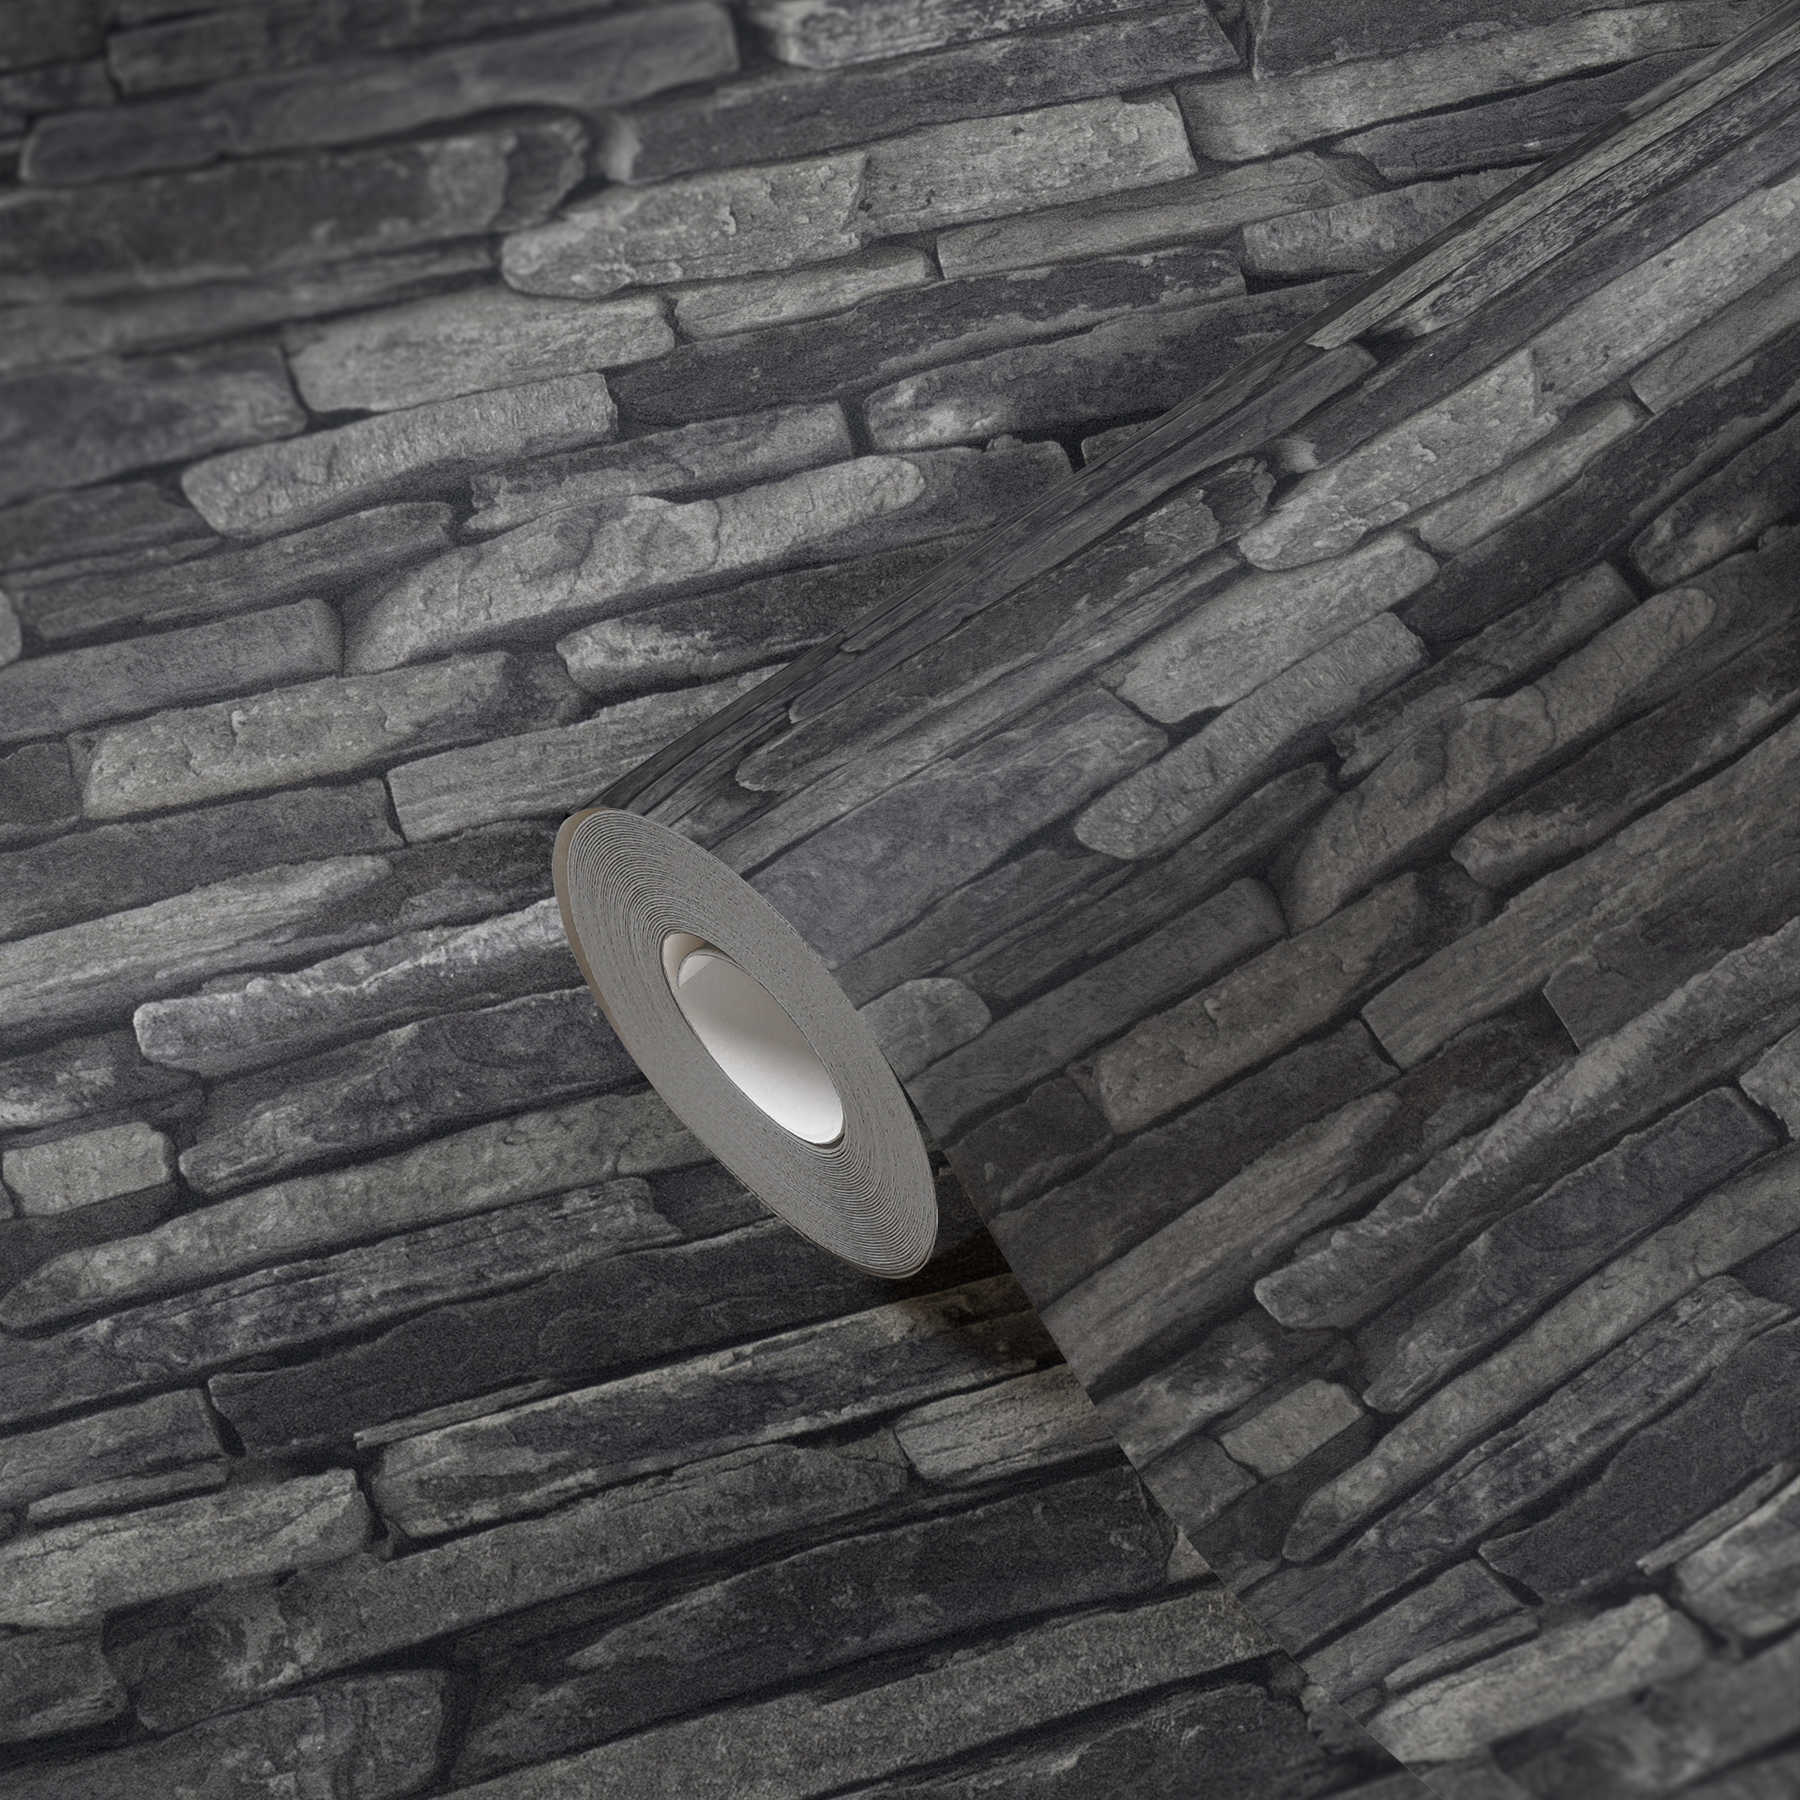             Wallpaper with stone look, dark natural stones & 3D effect - grey, black
        